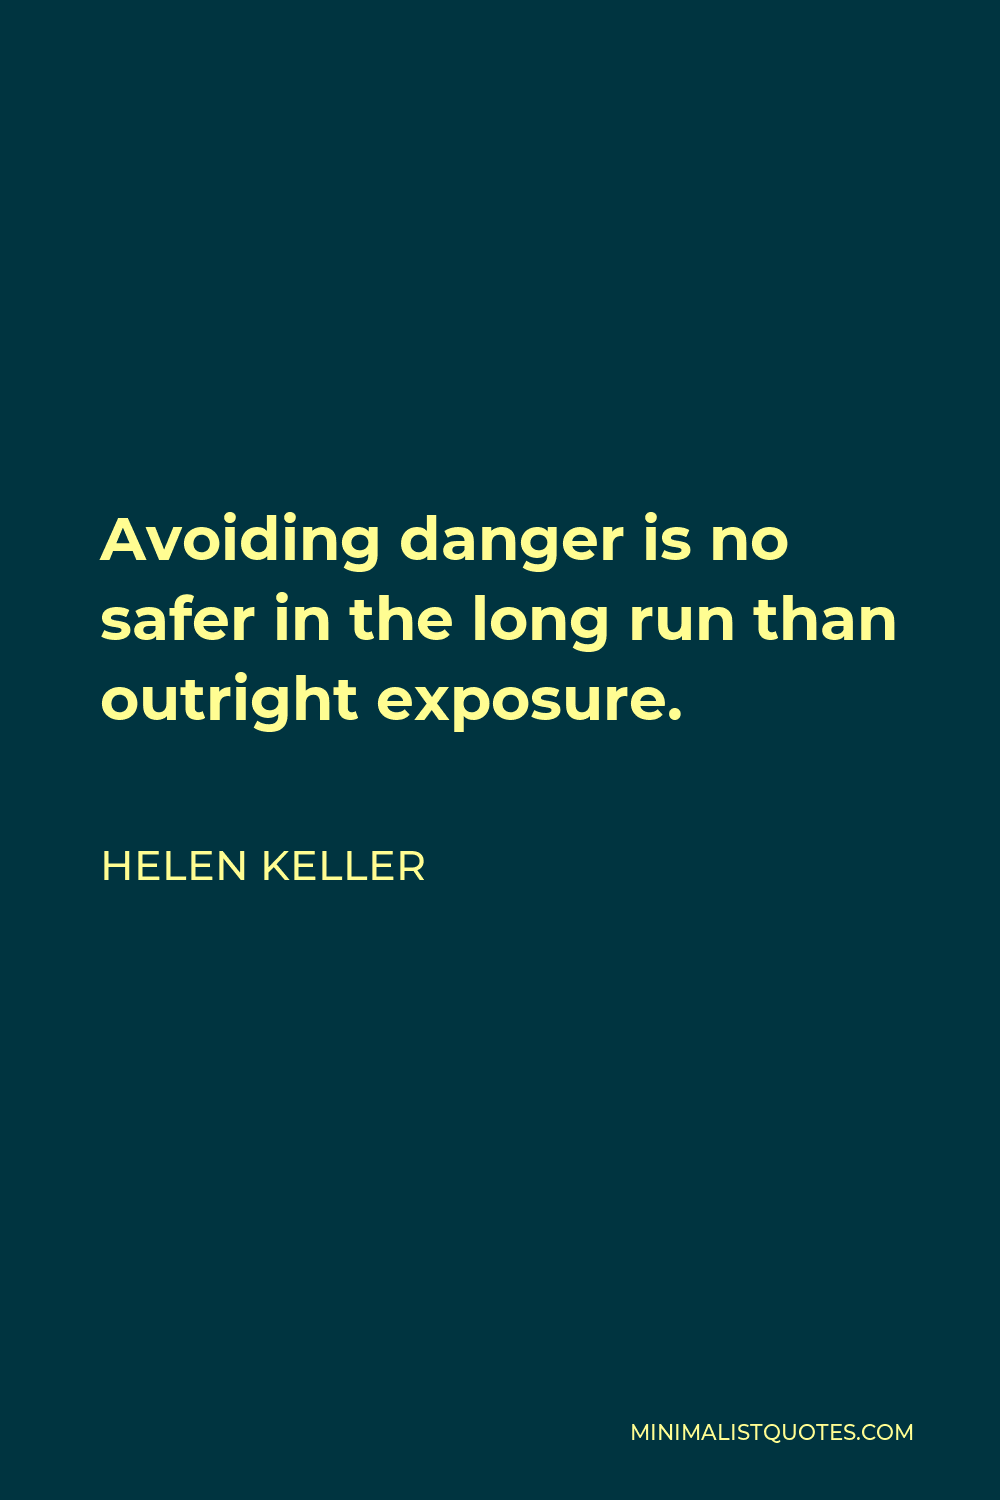 Helen Keller Quote - Avoiding danger is no safer in the long run than outright exposure.